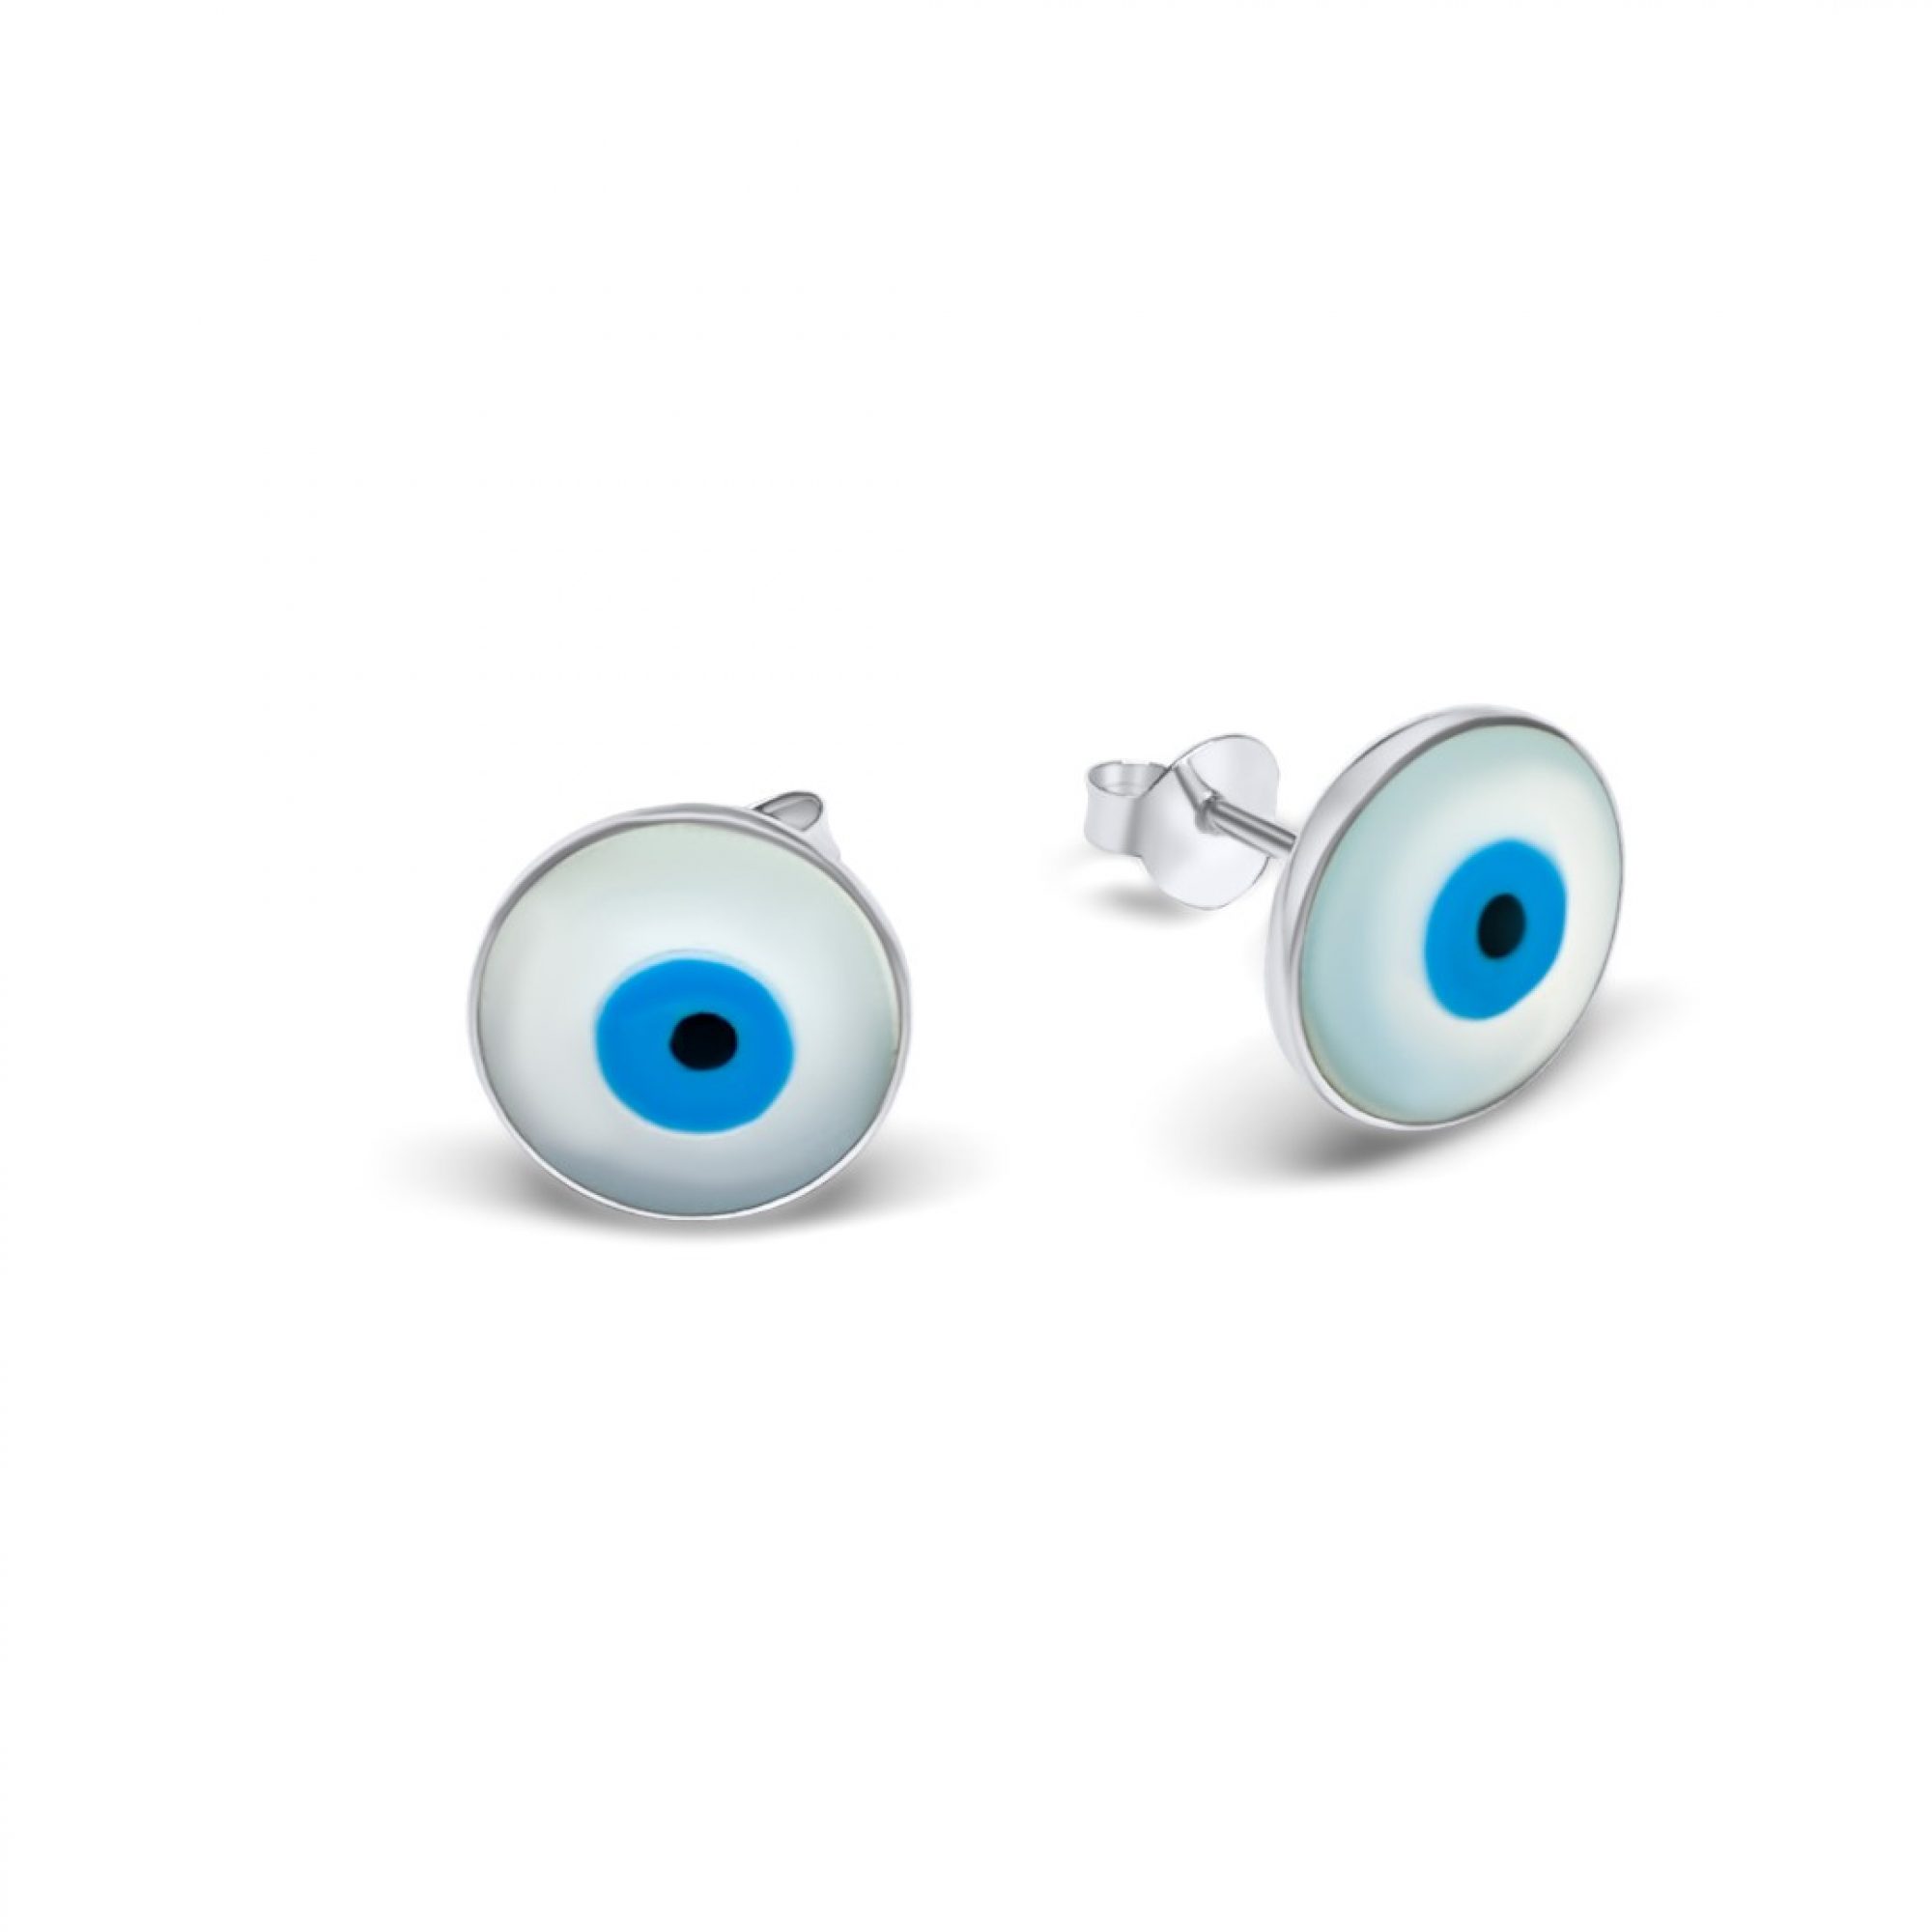 Eye stud earrings with mother of pearl